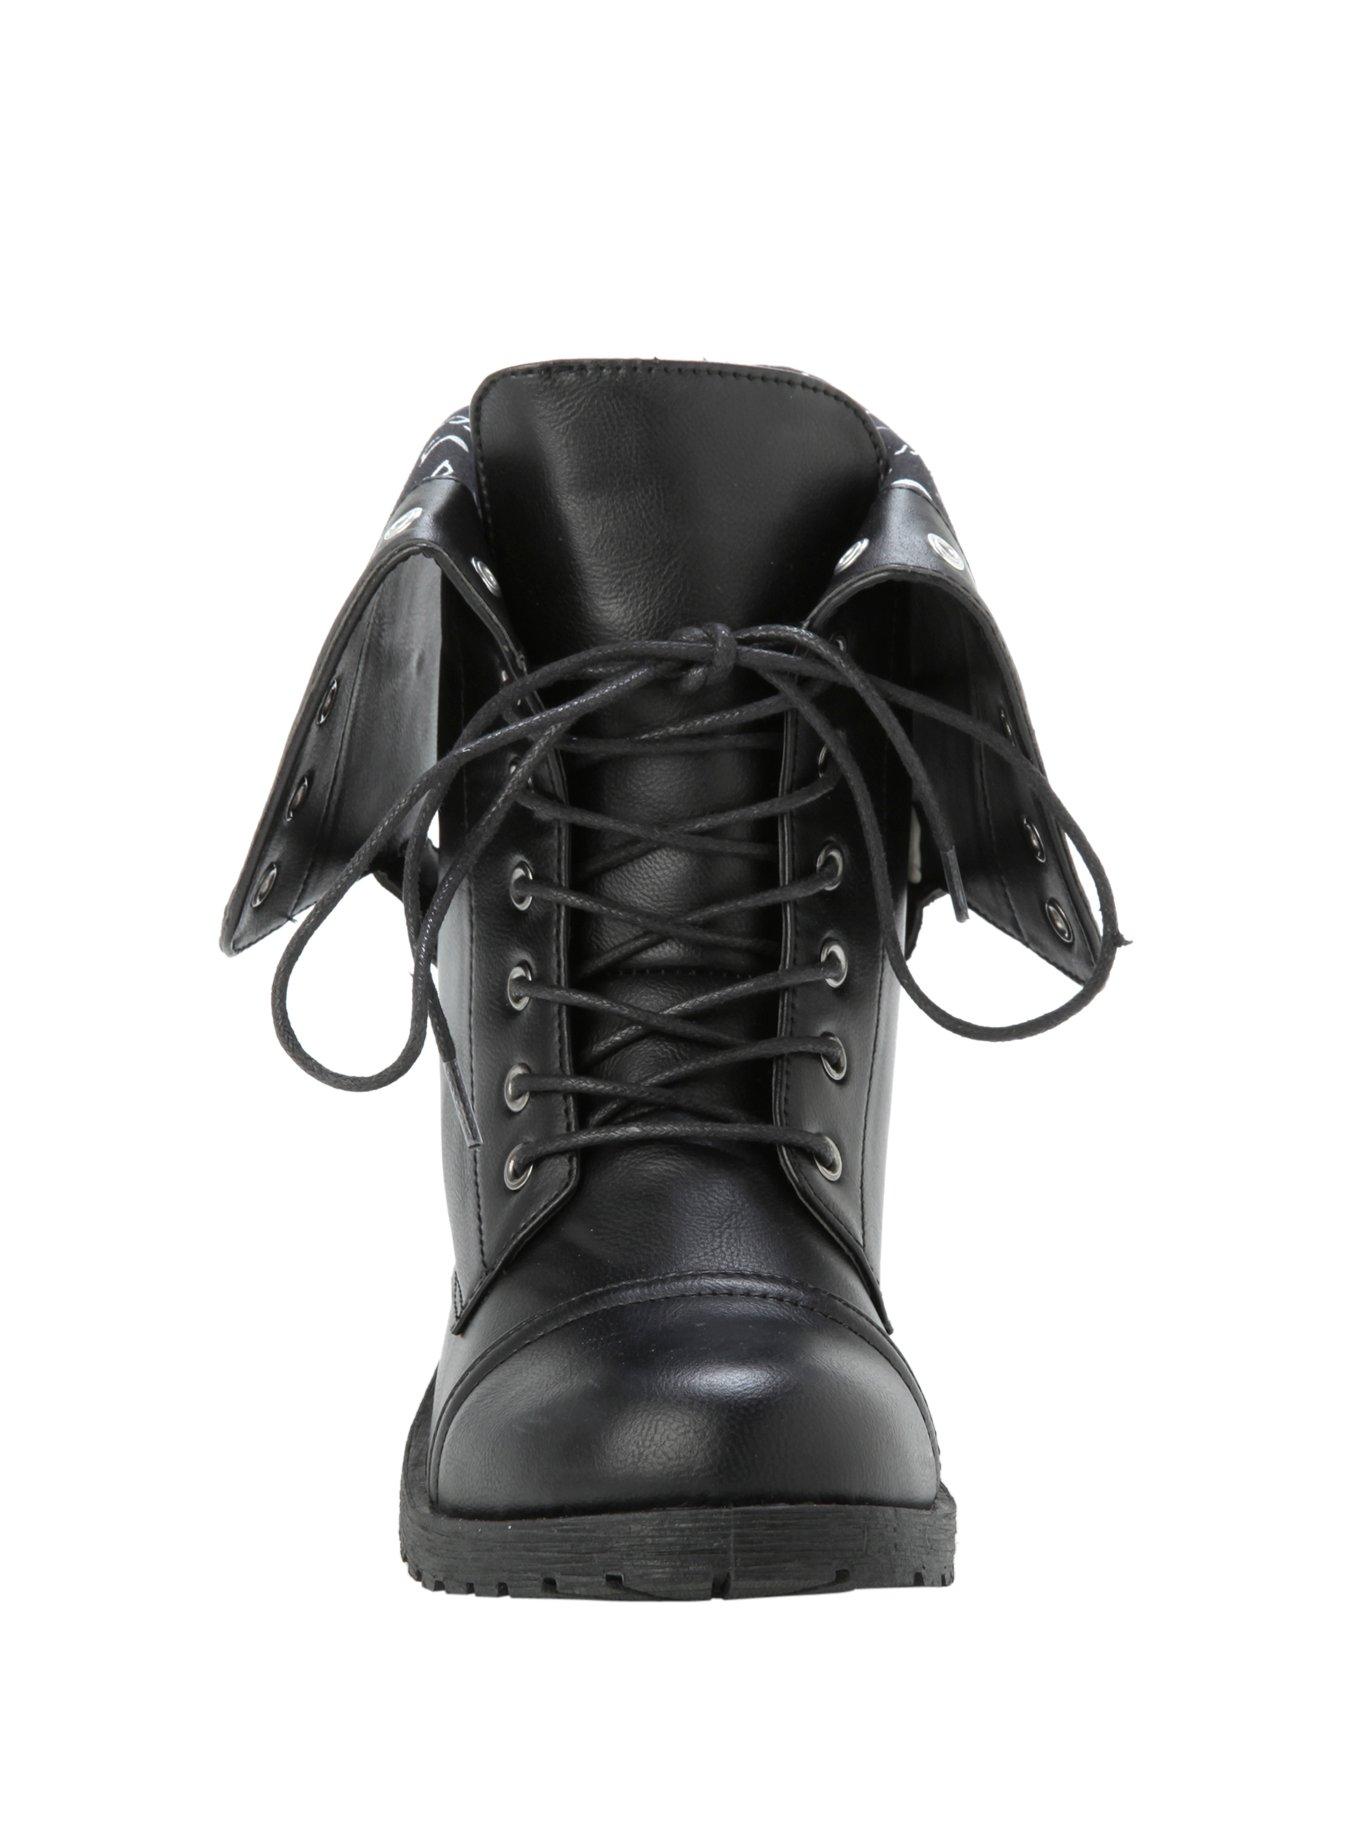 Music Note Combat Boots, BLACK, alternate